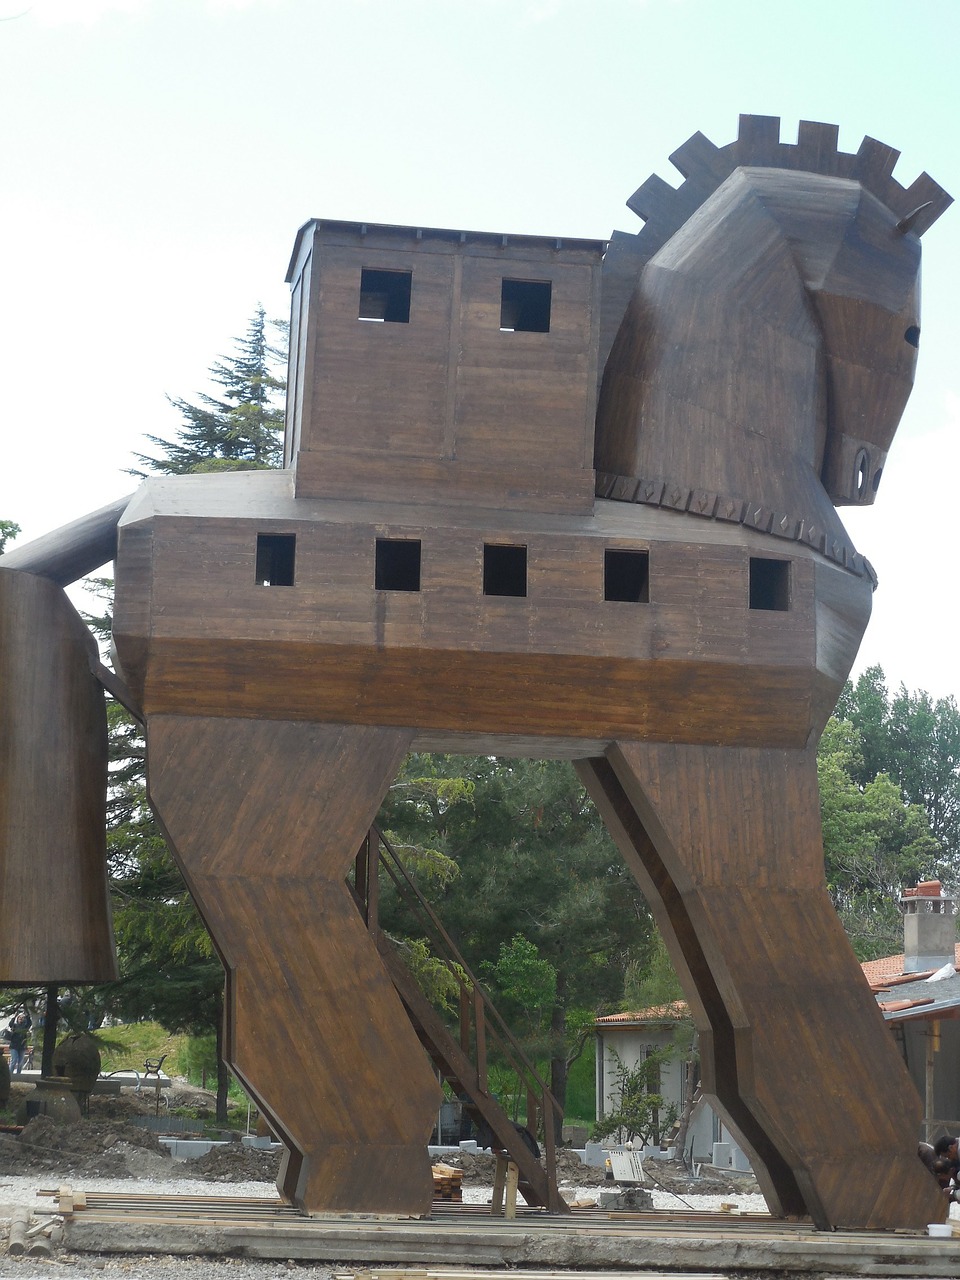 Trojan horse,trojan,troy,wooden horse,homer - free image from needpix.com